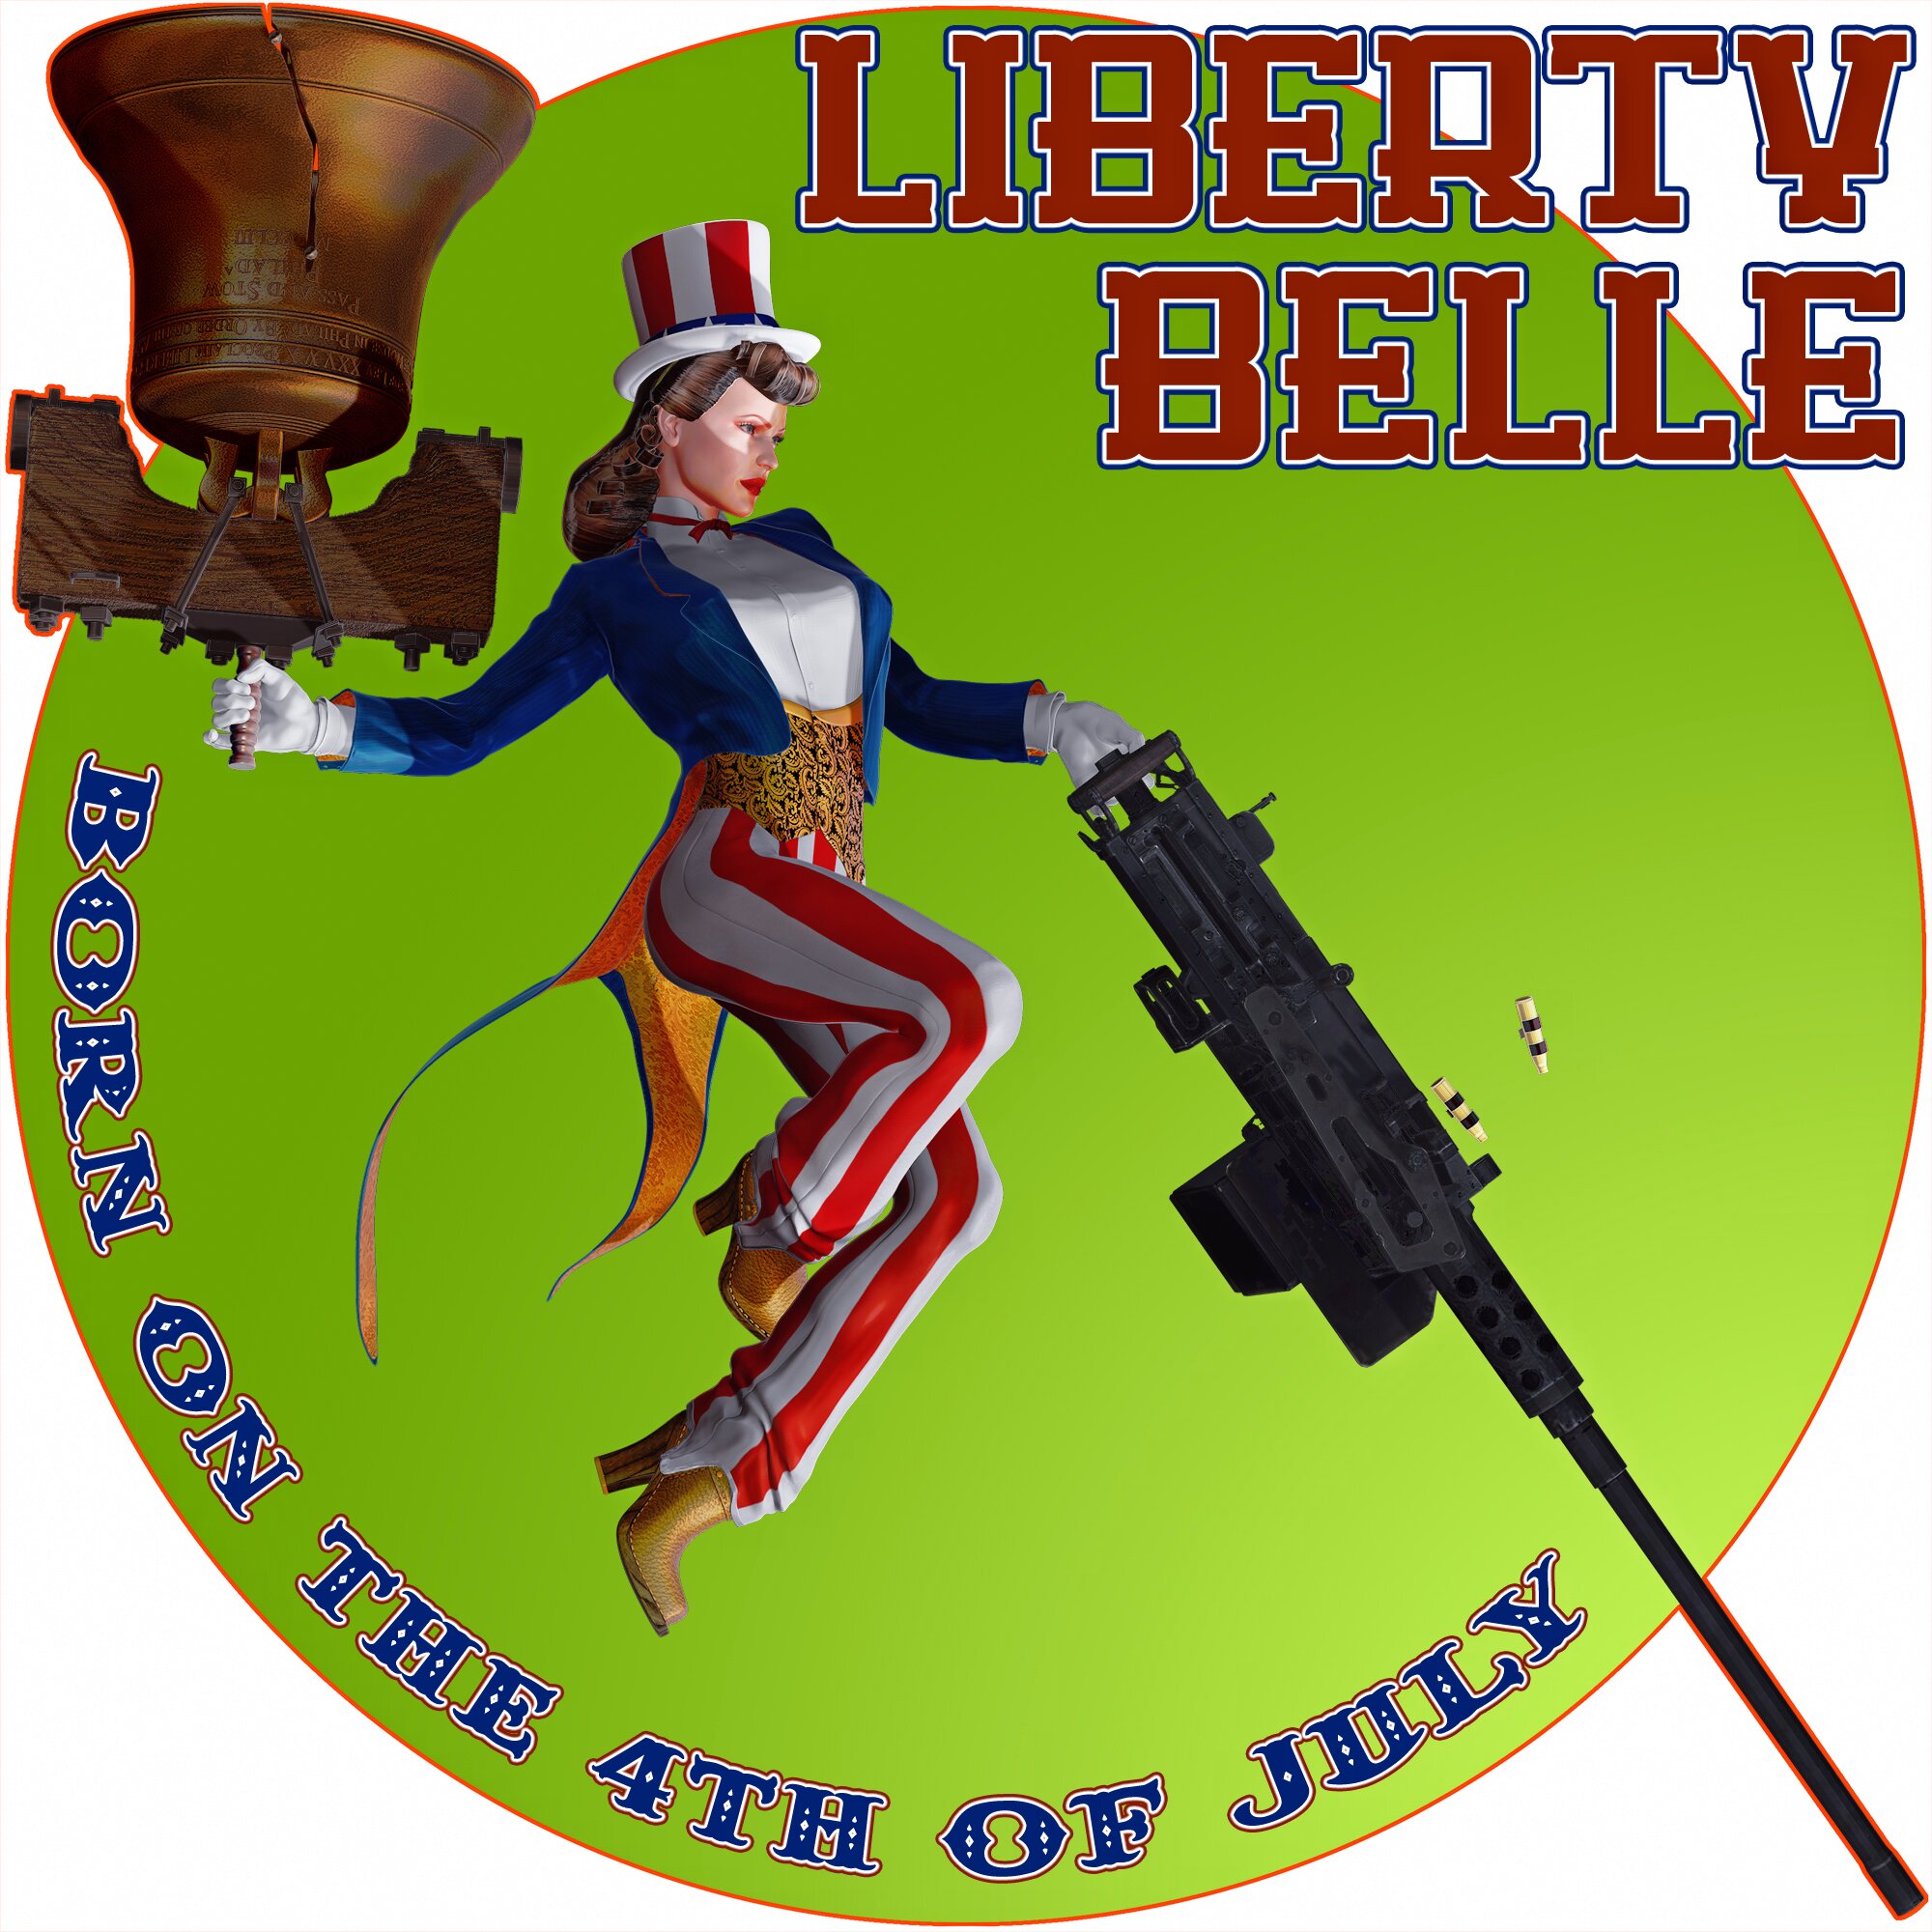 LibertyBelle10x10front_proc.jpg